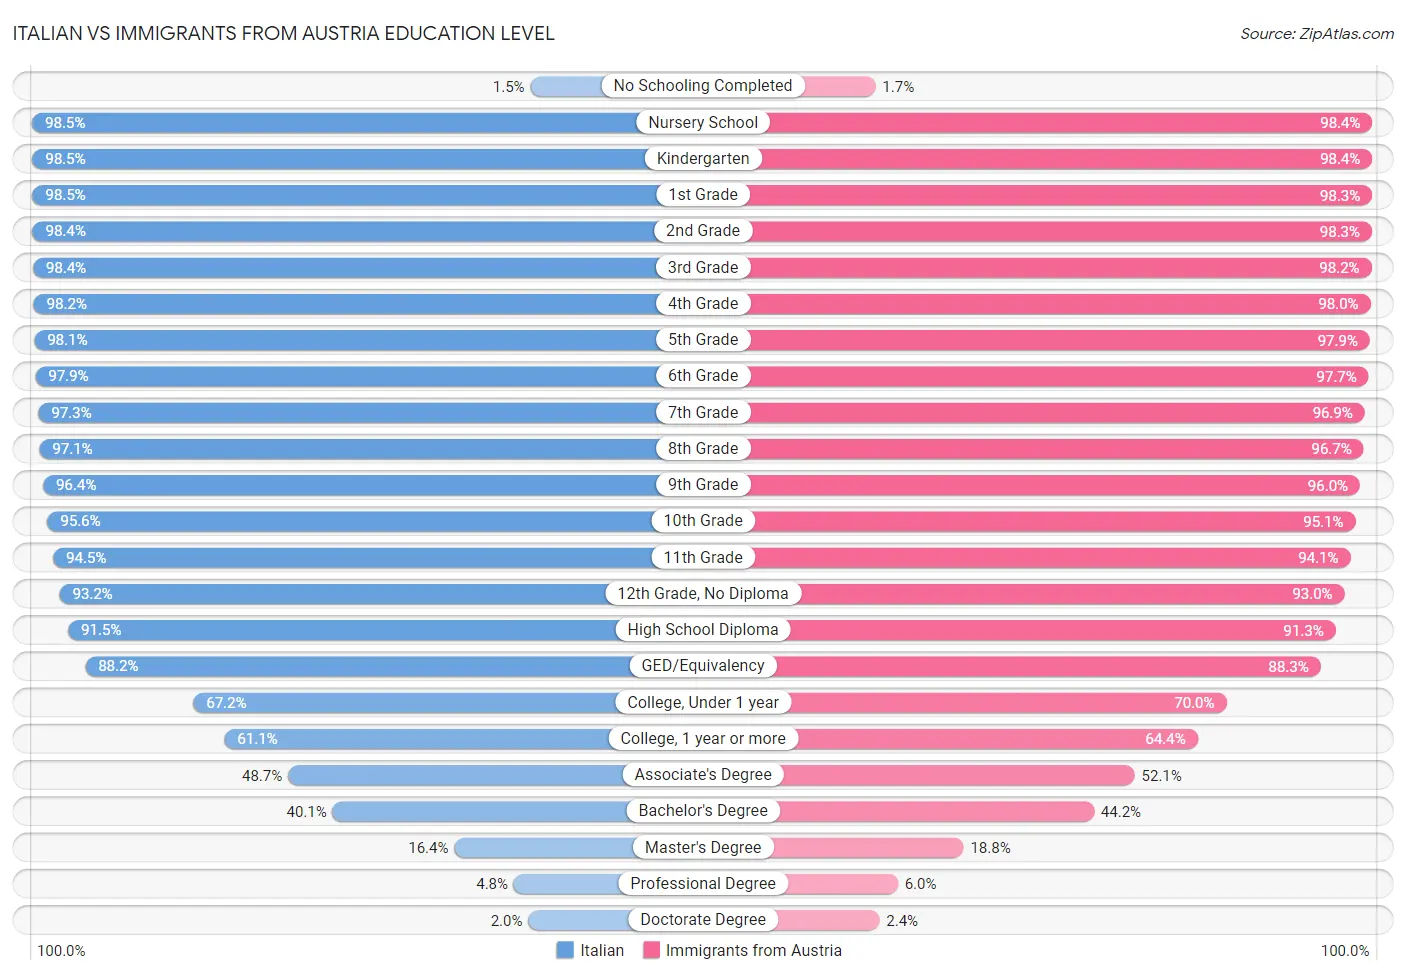 Italian vs Immigrants from Austria Education Level